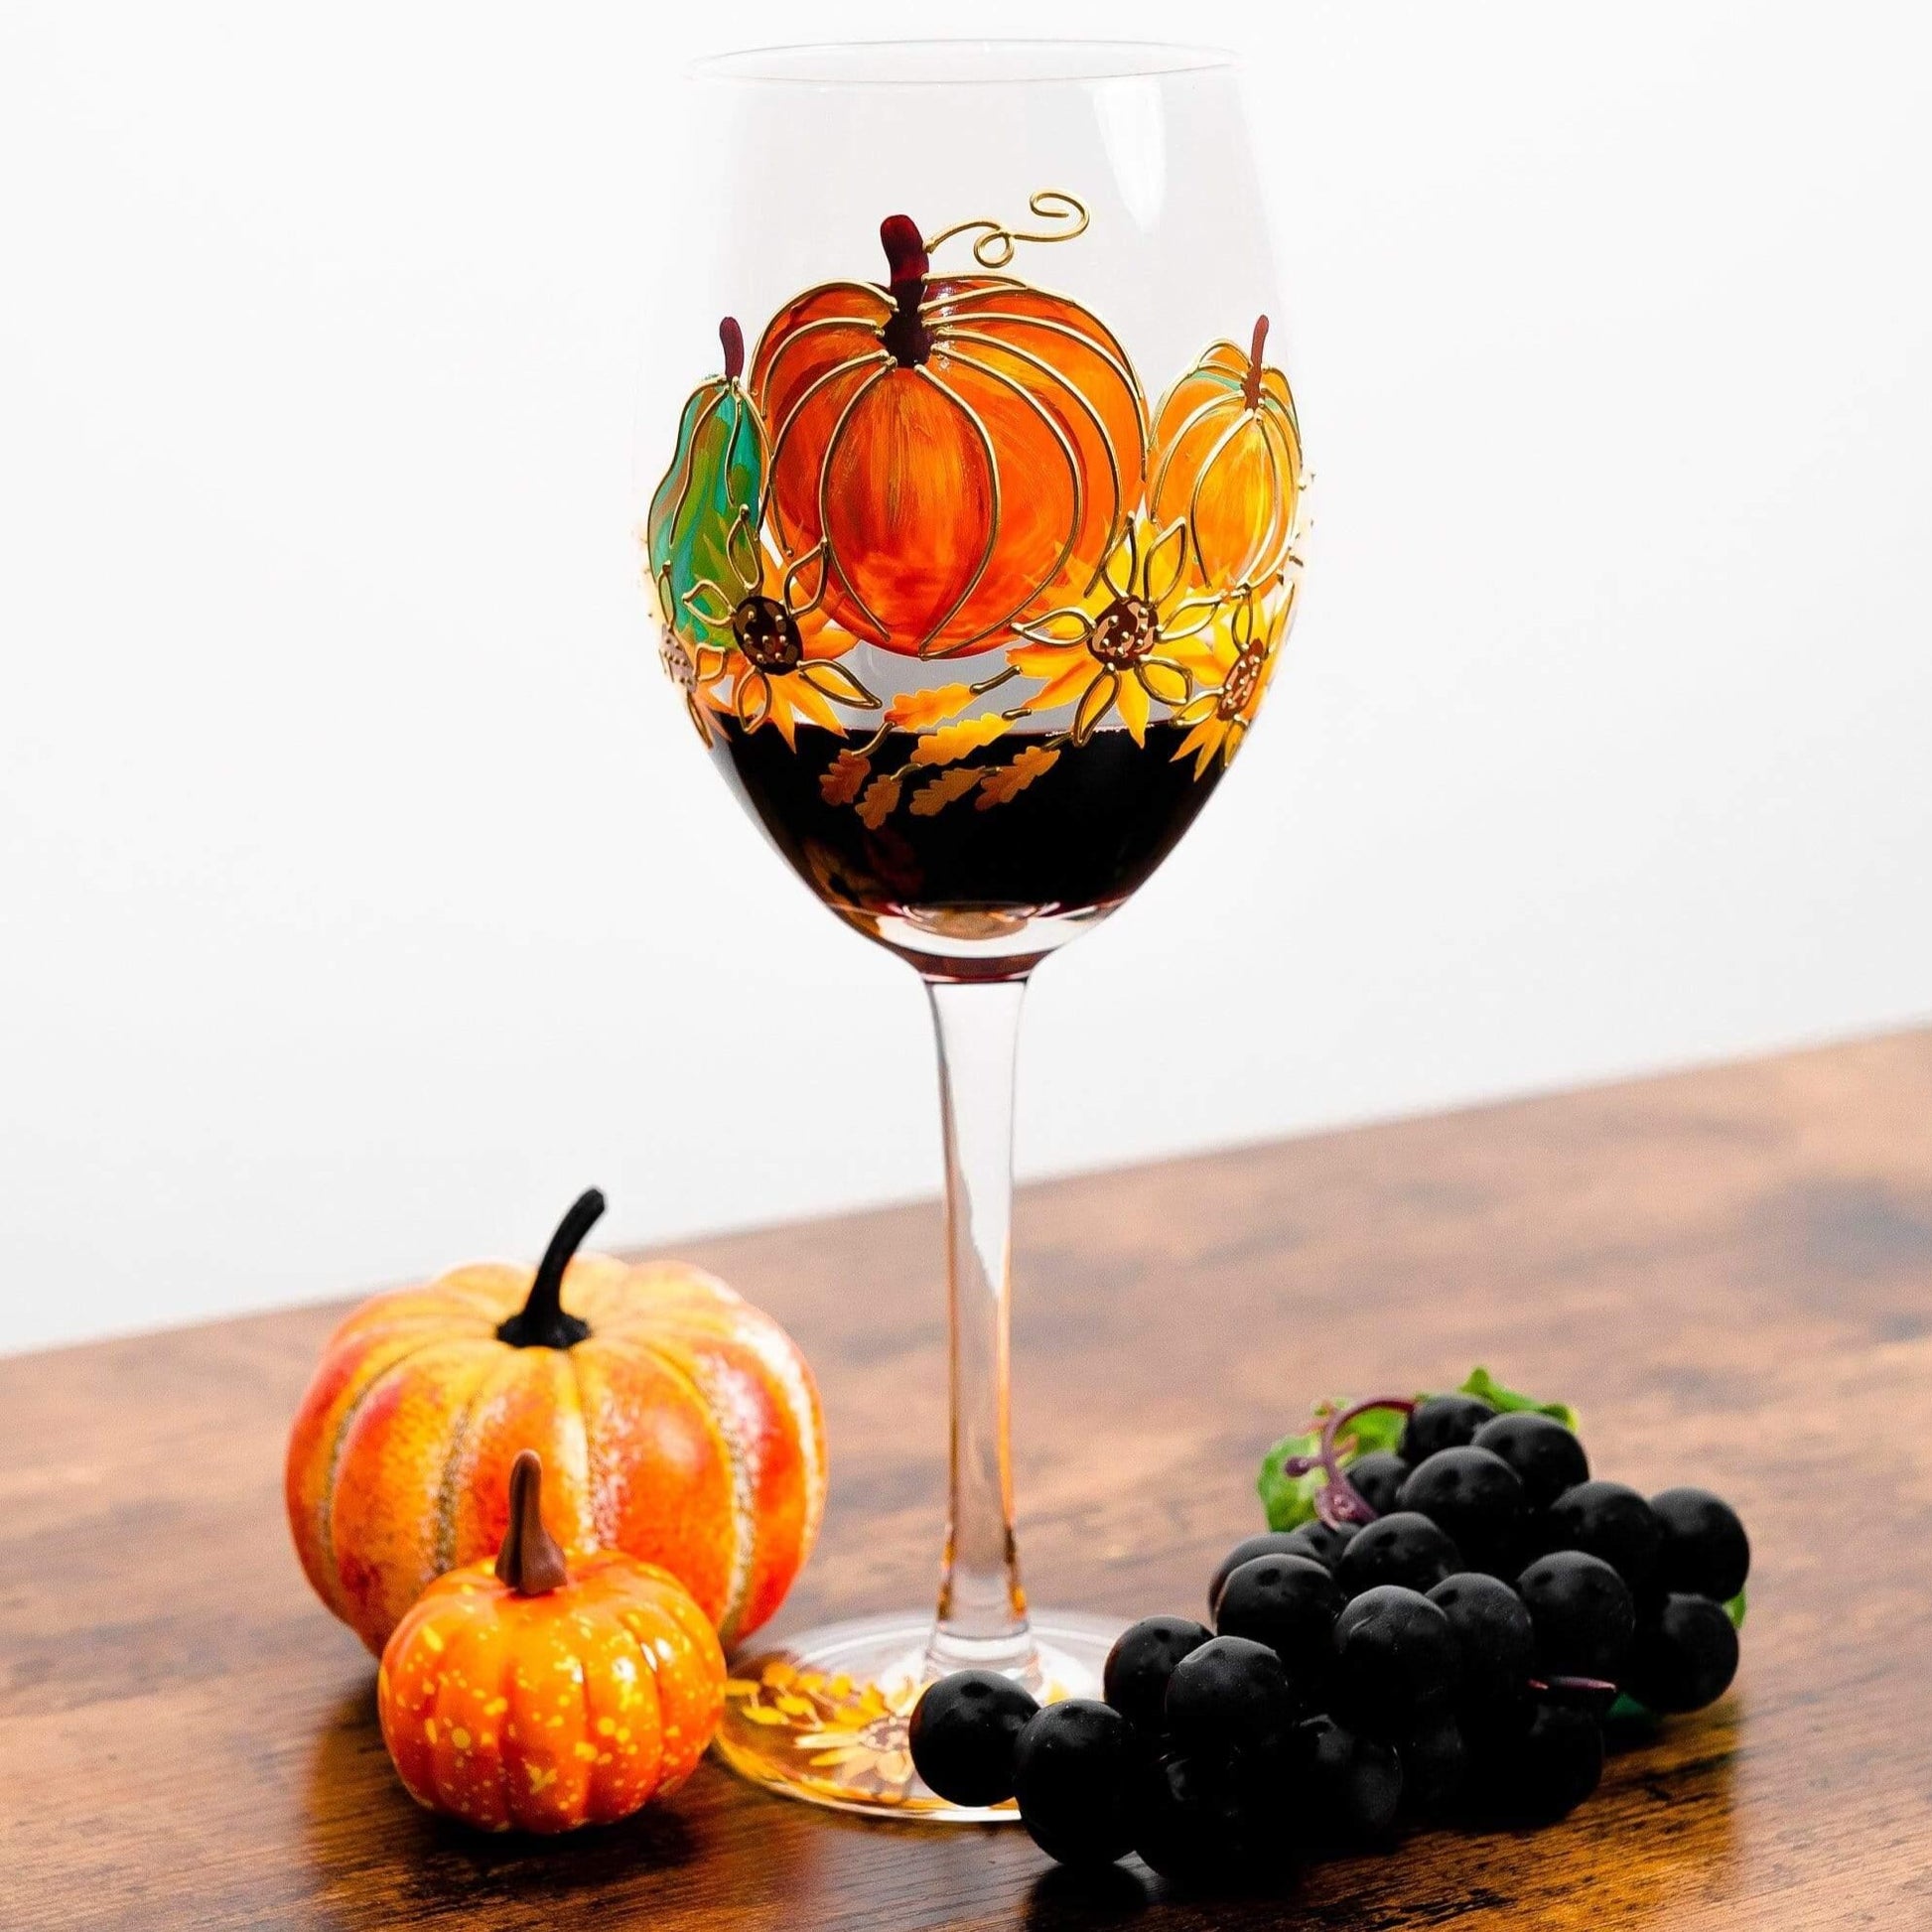 Modern Wine Glasses, Yellow Grape , Red Wine Glass, Large Wine